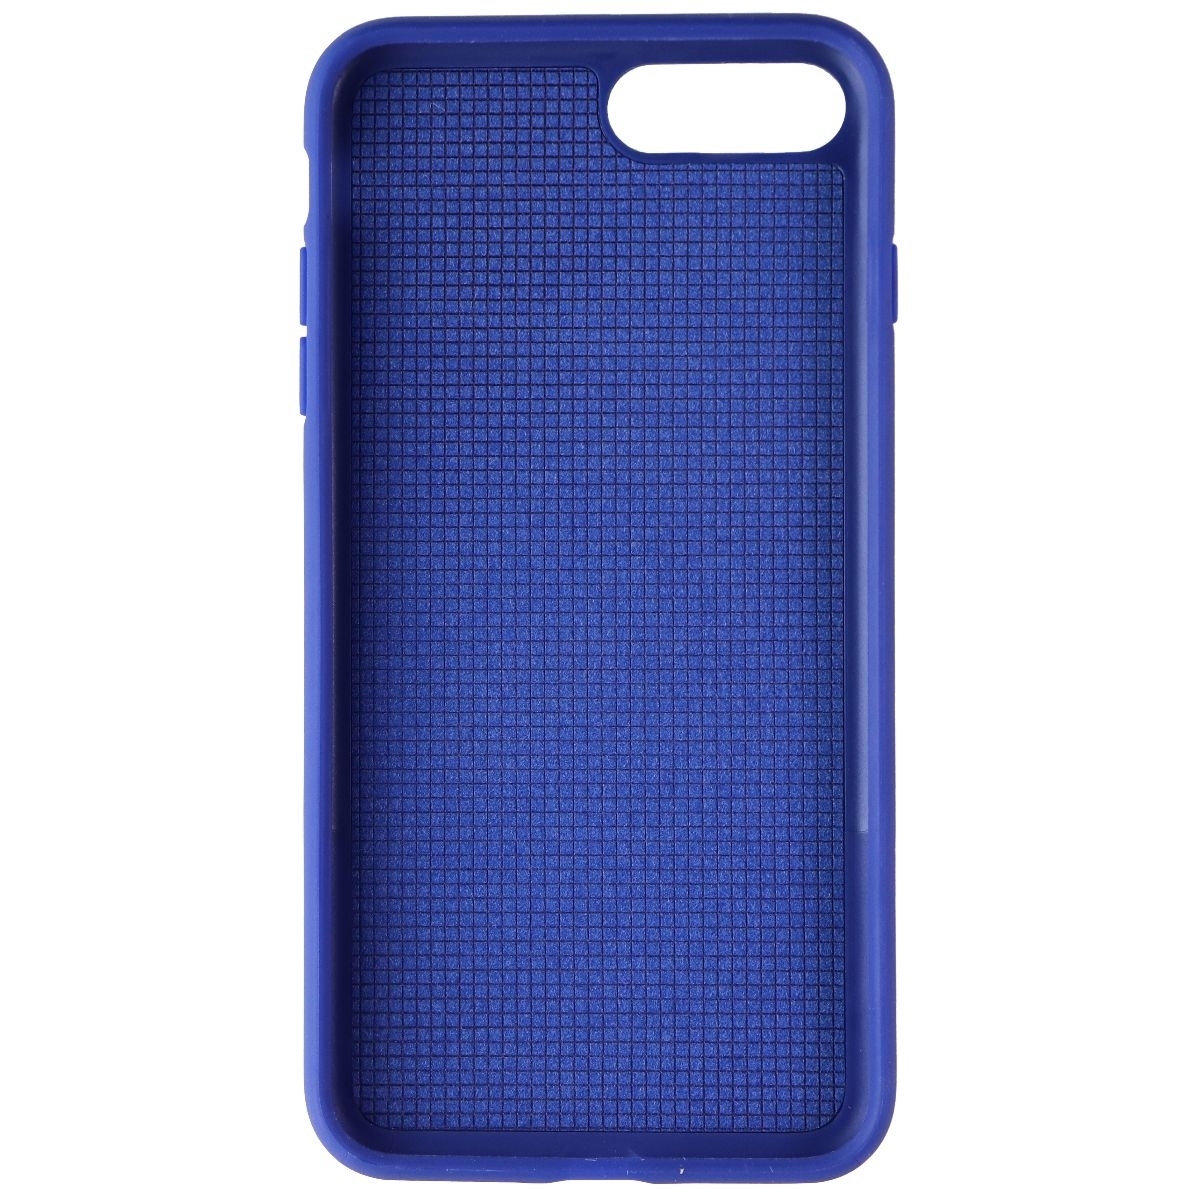 Jake Spade Color-Block Series Case For Apple IPhone 8 Plus/7 Plus - Black/Blue (Refurbished)